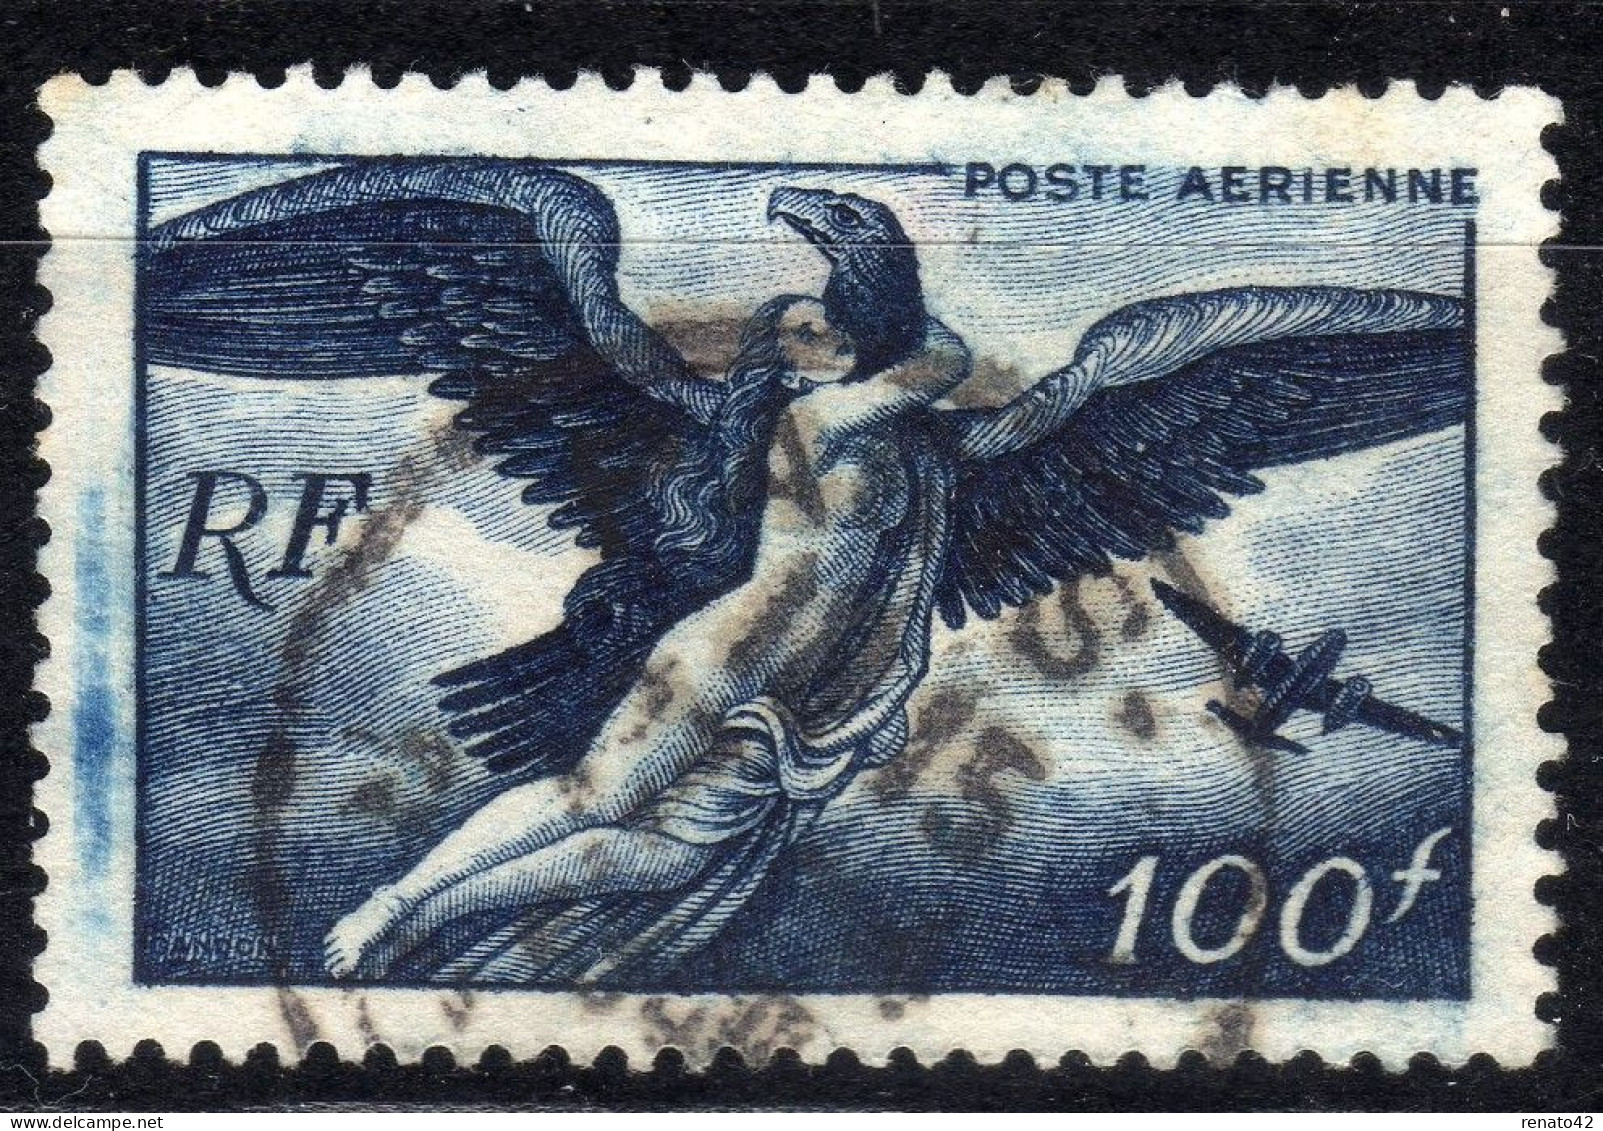 VARIETE Sur TIMBRE OBLITERE FRANCE POSTE AERIENNE N° 18 - DEFAUT D'essuyage - Used Stamps